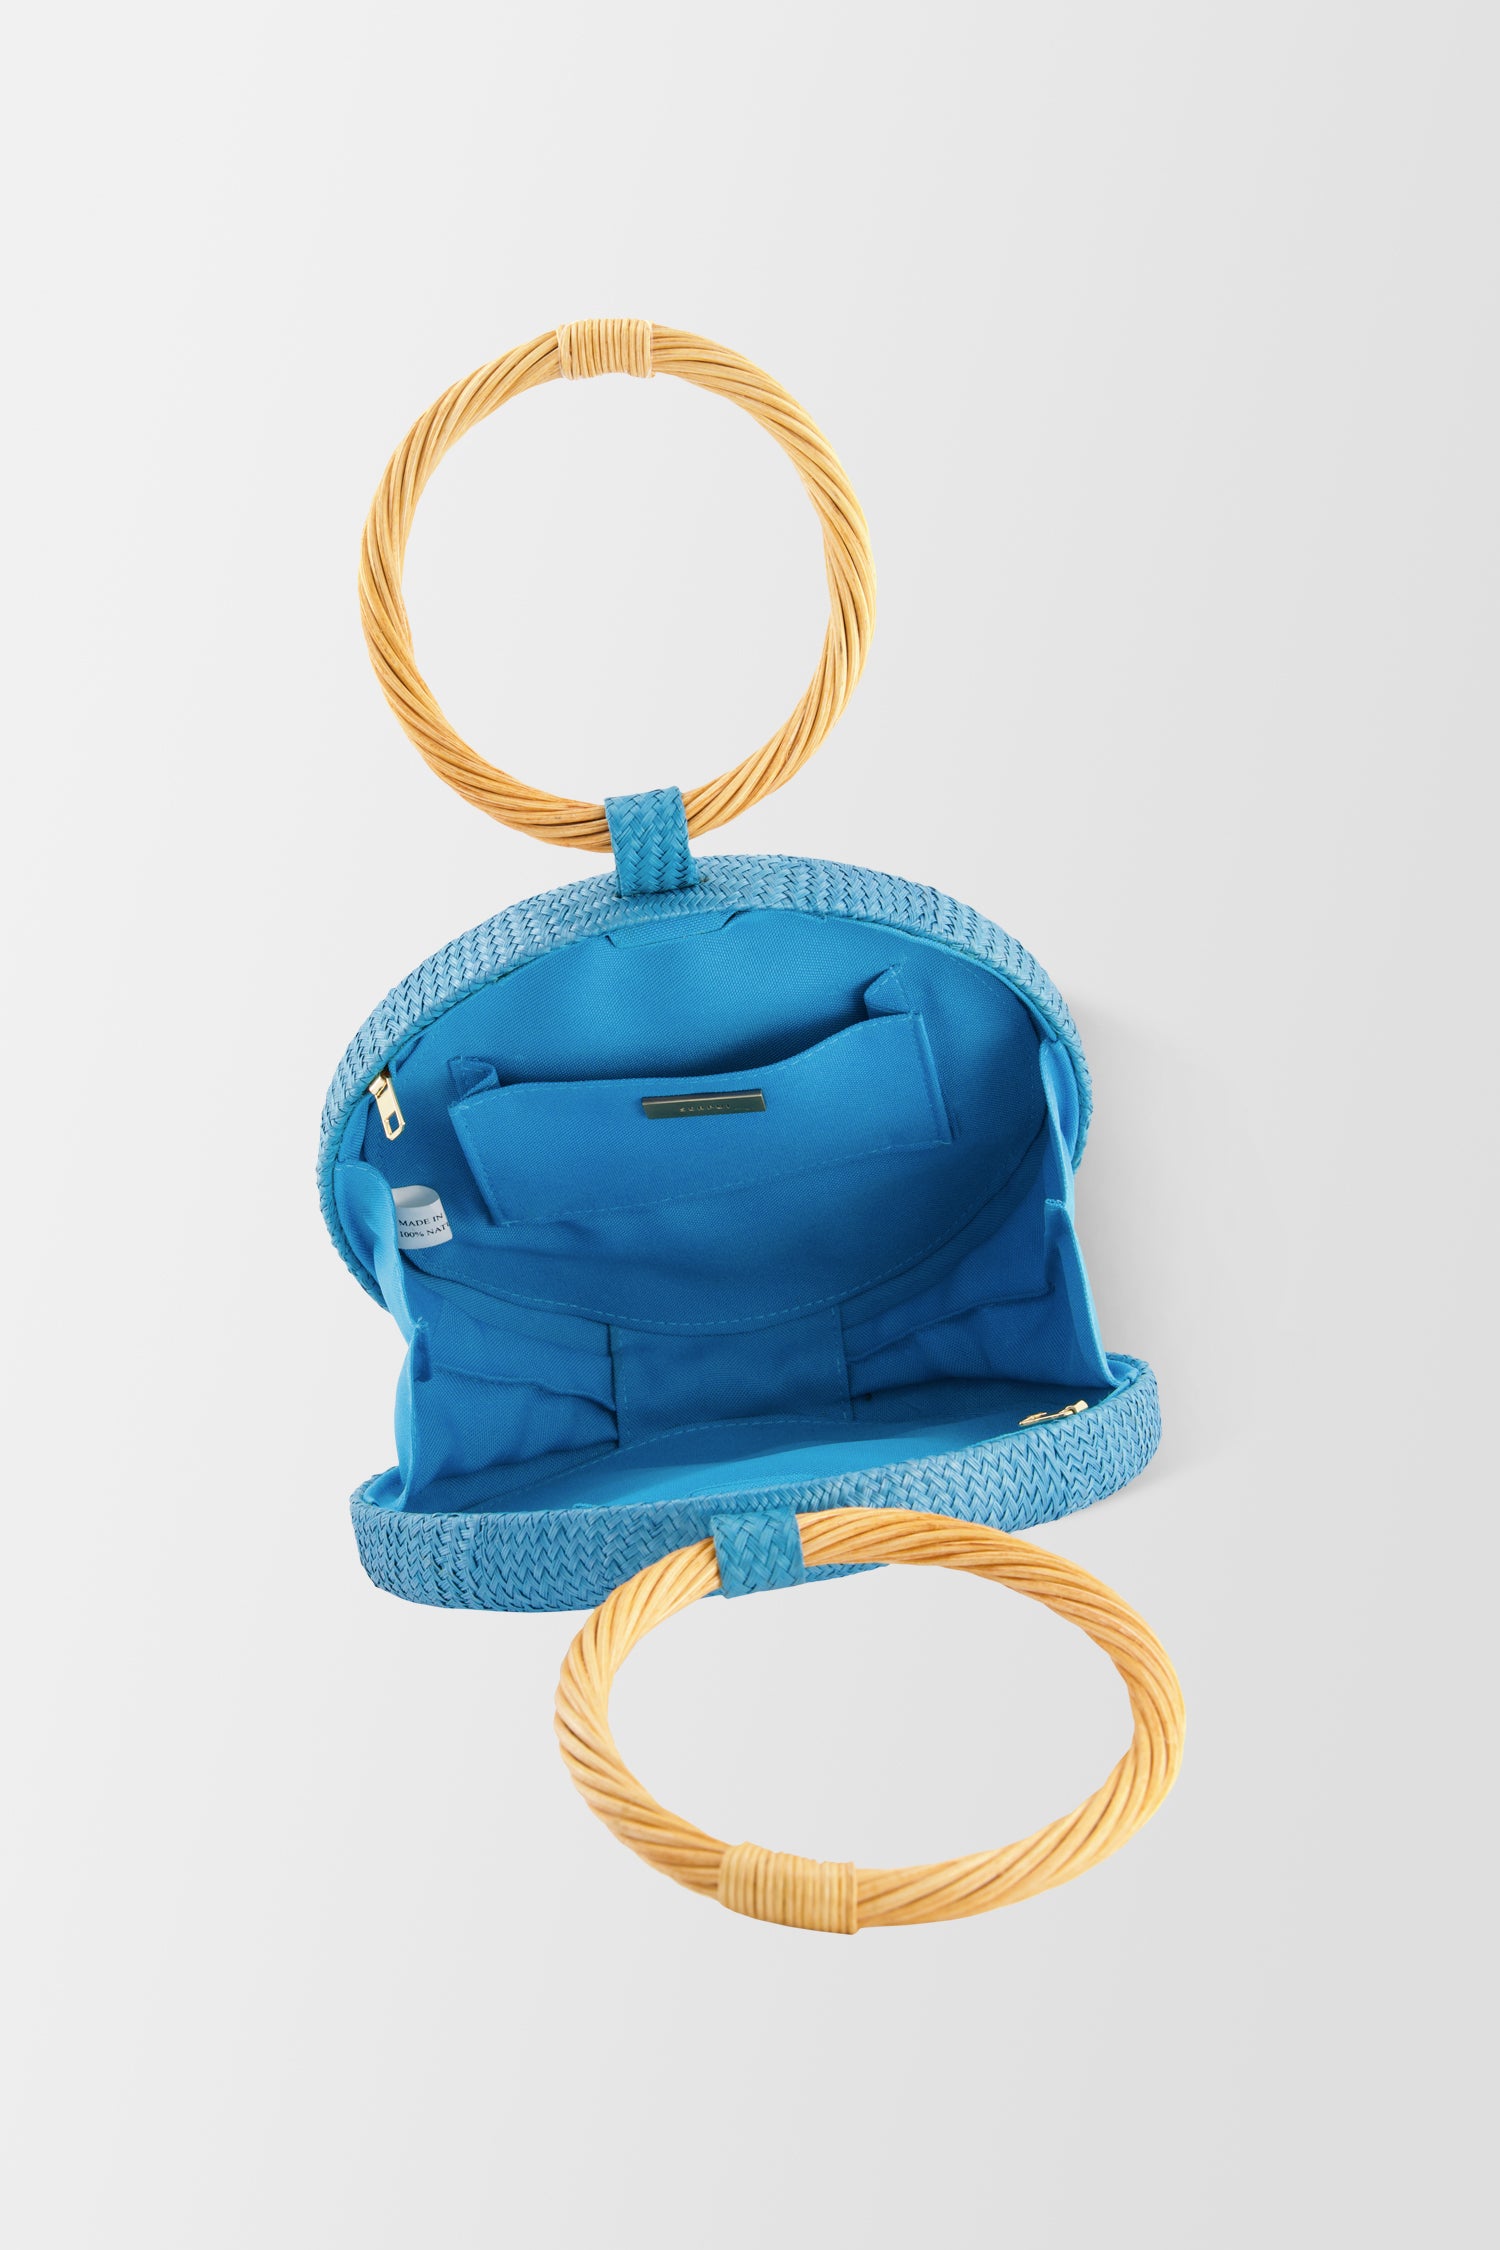 Serpui Turquoise Serena Bun Handbag